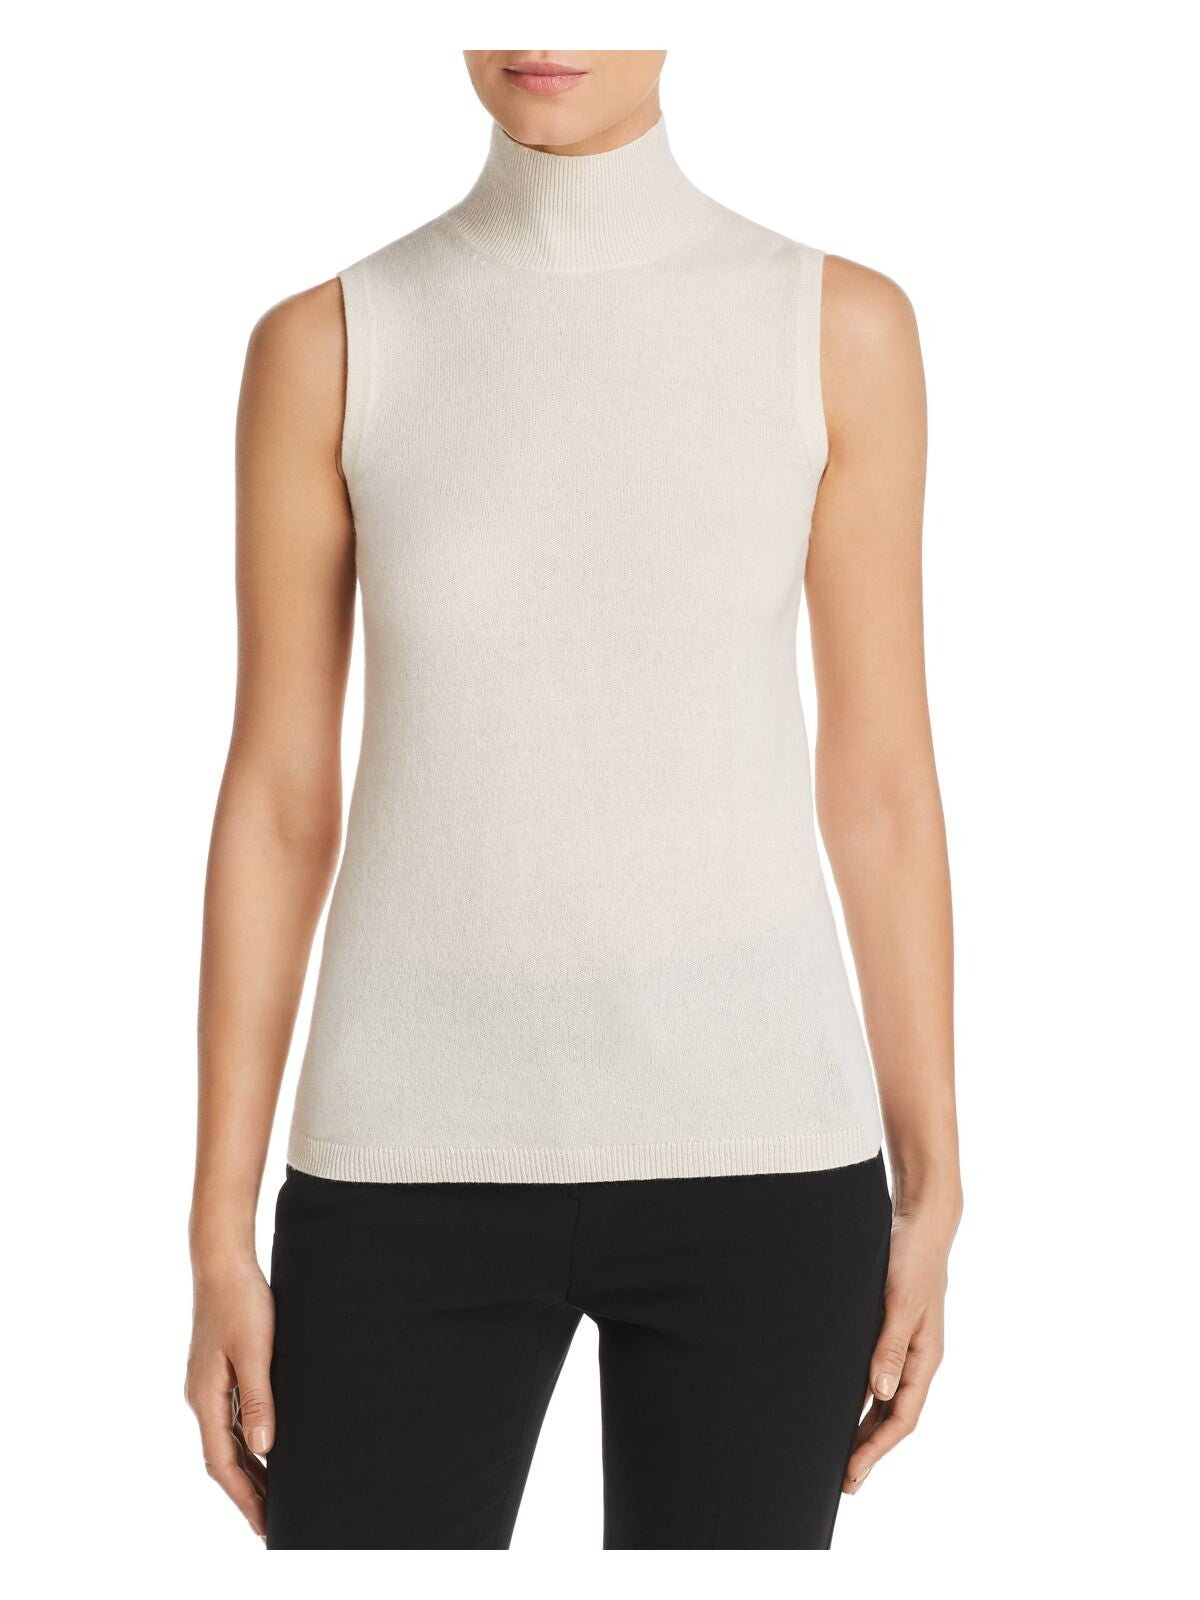 Designer Brand Womens Ivory Zippered Sleeveless Mock Neck Sweater XL